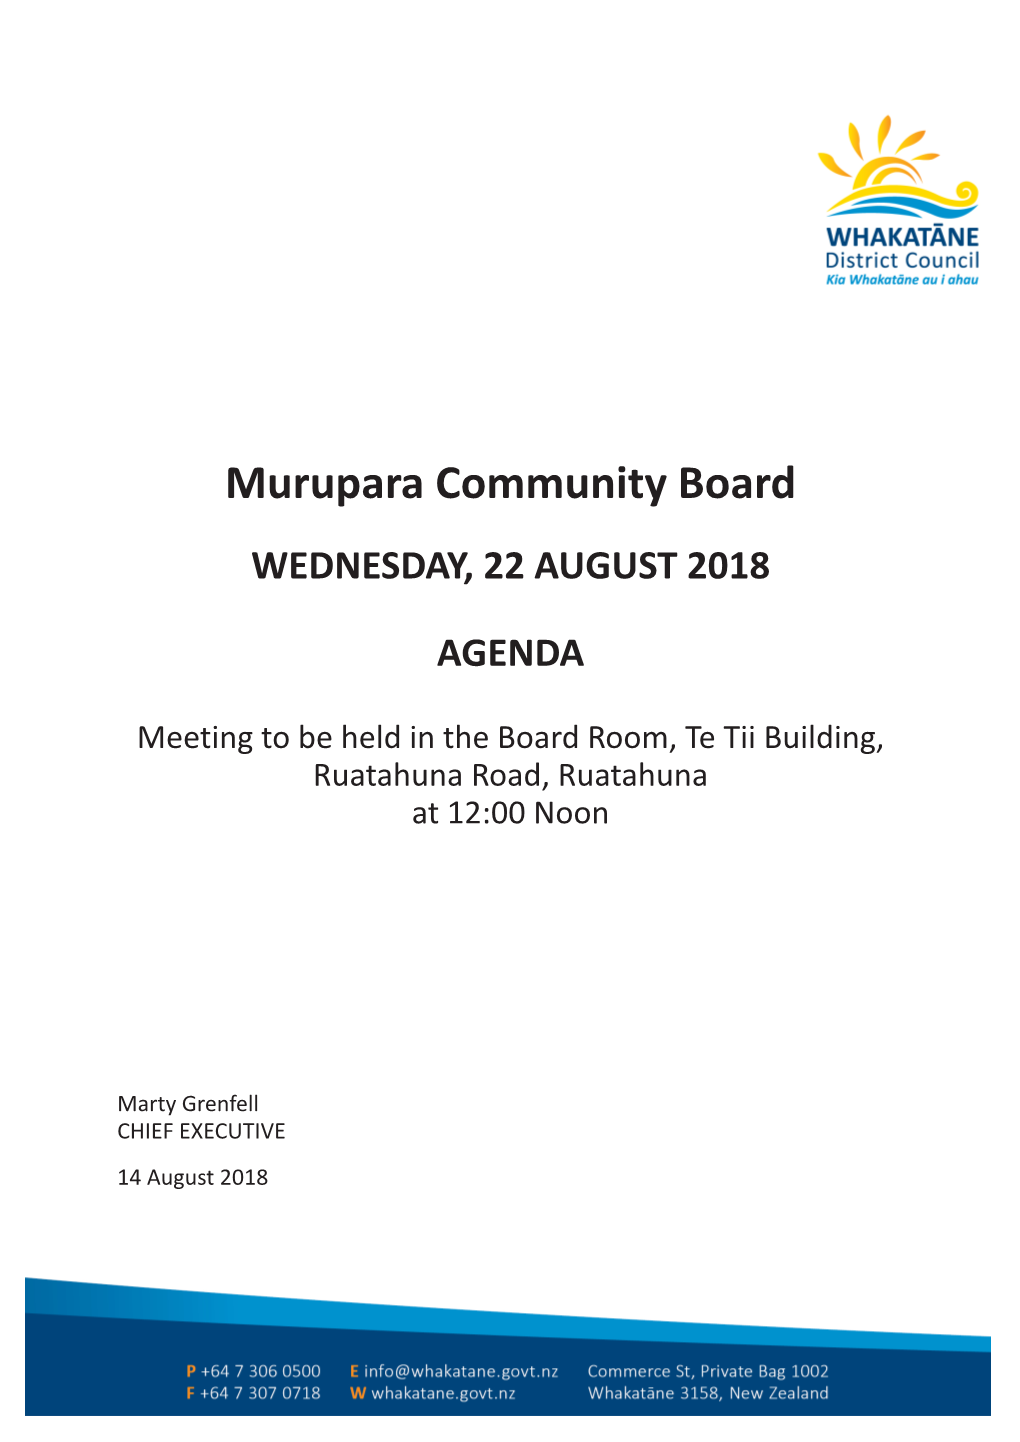 Murupara Community Board 22 August 2018